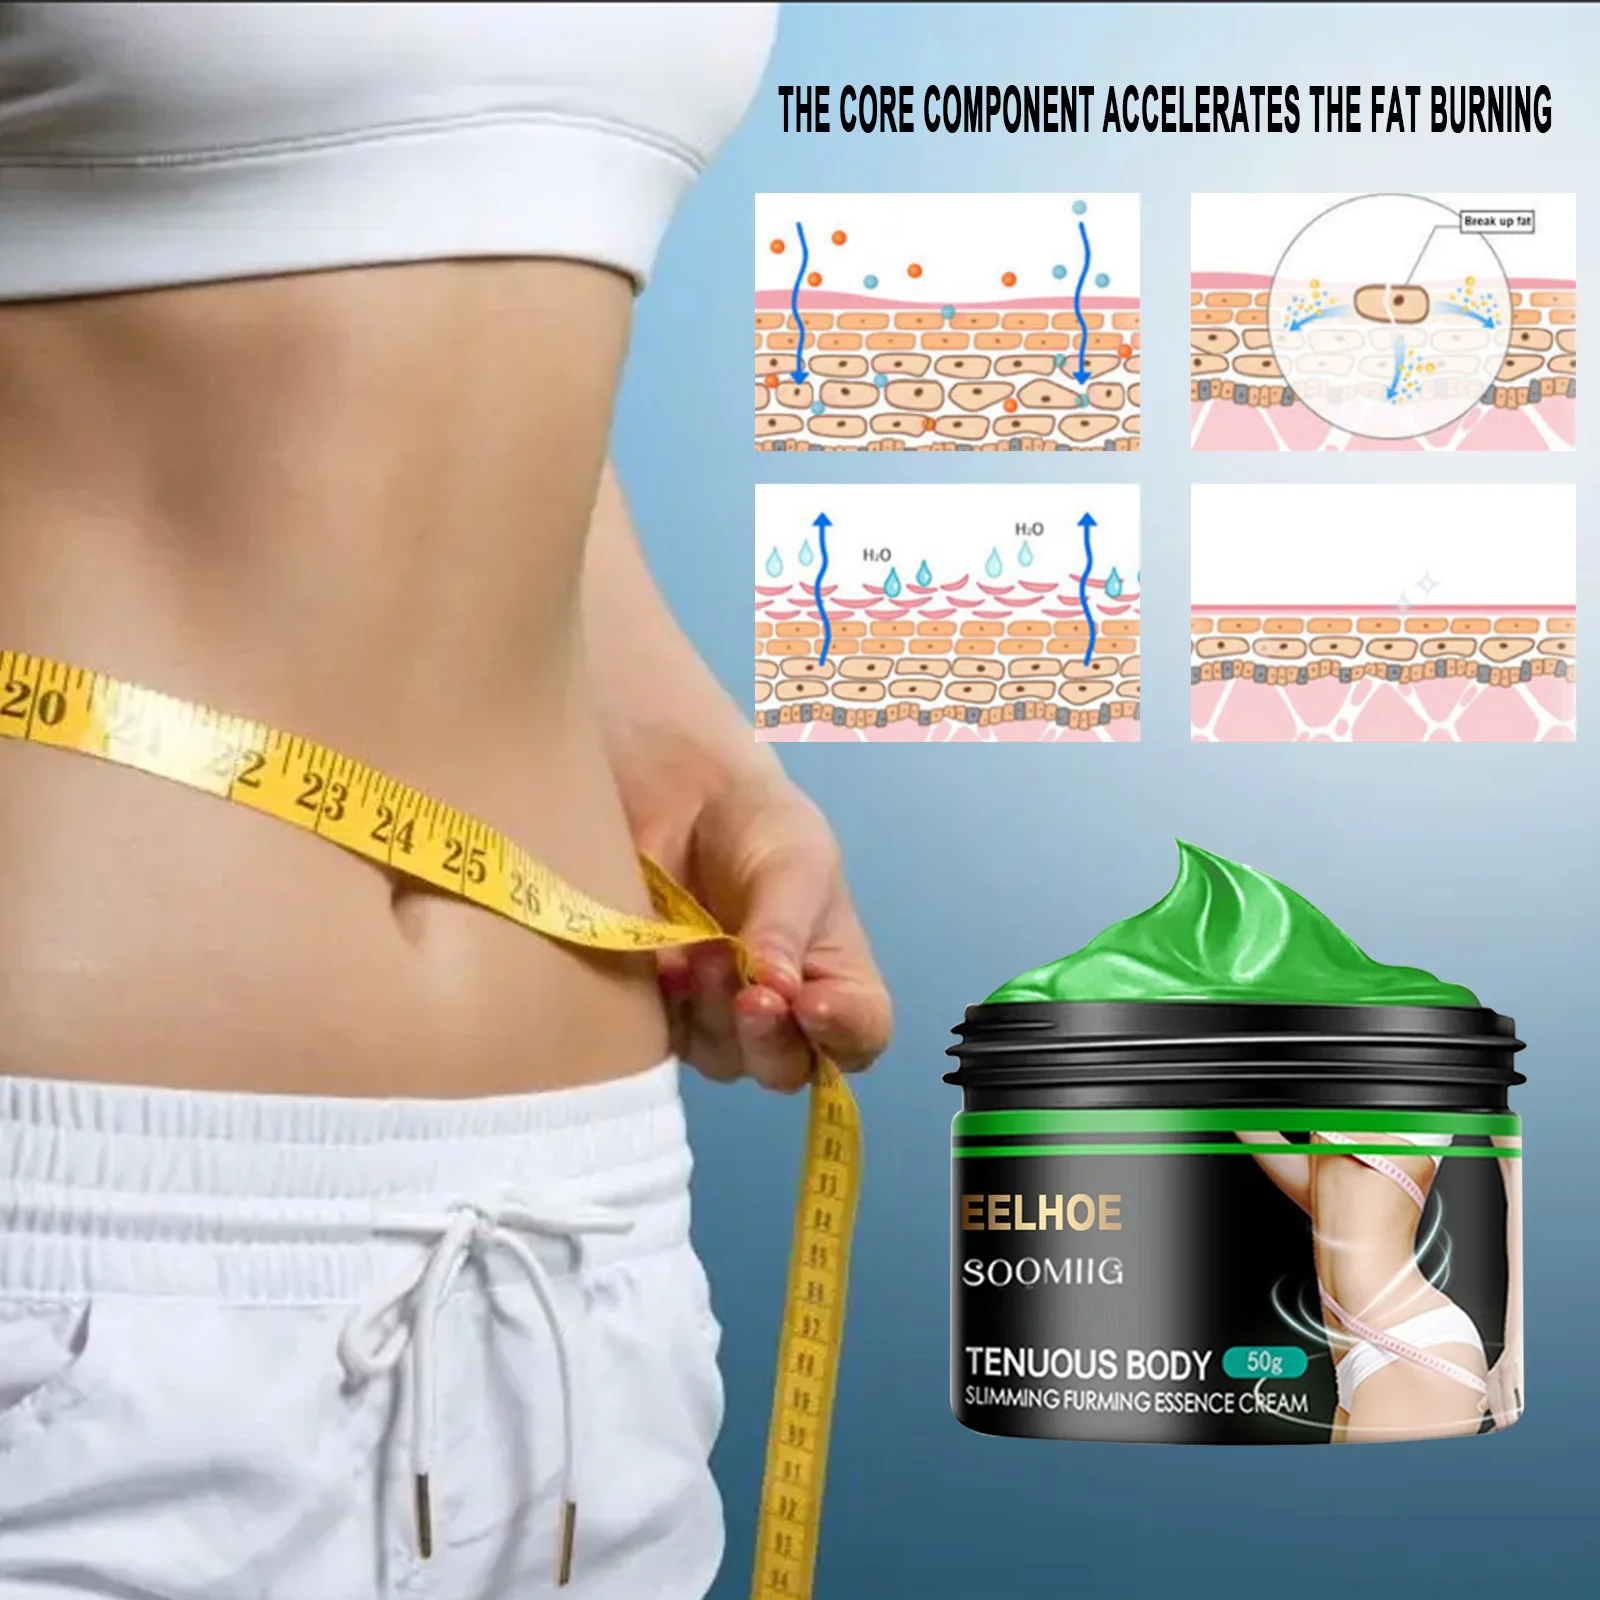 

50g adelgazar perder peso Slimming Cream Reduce Cellulite Lose Weight Burning Fat Cream Skin Cream Detox Tea Weight Loss